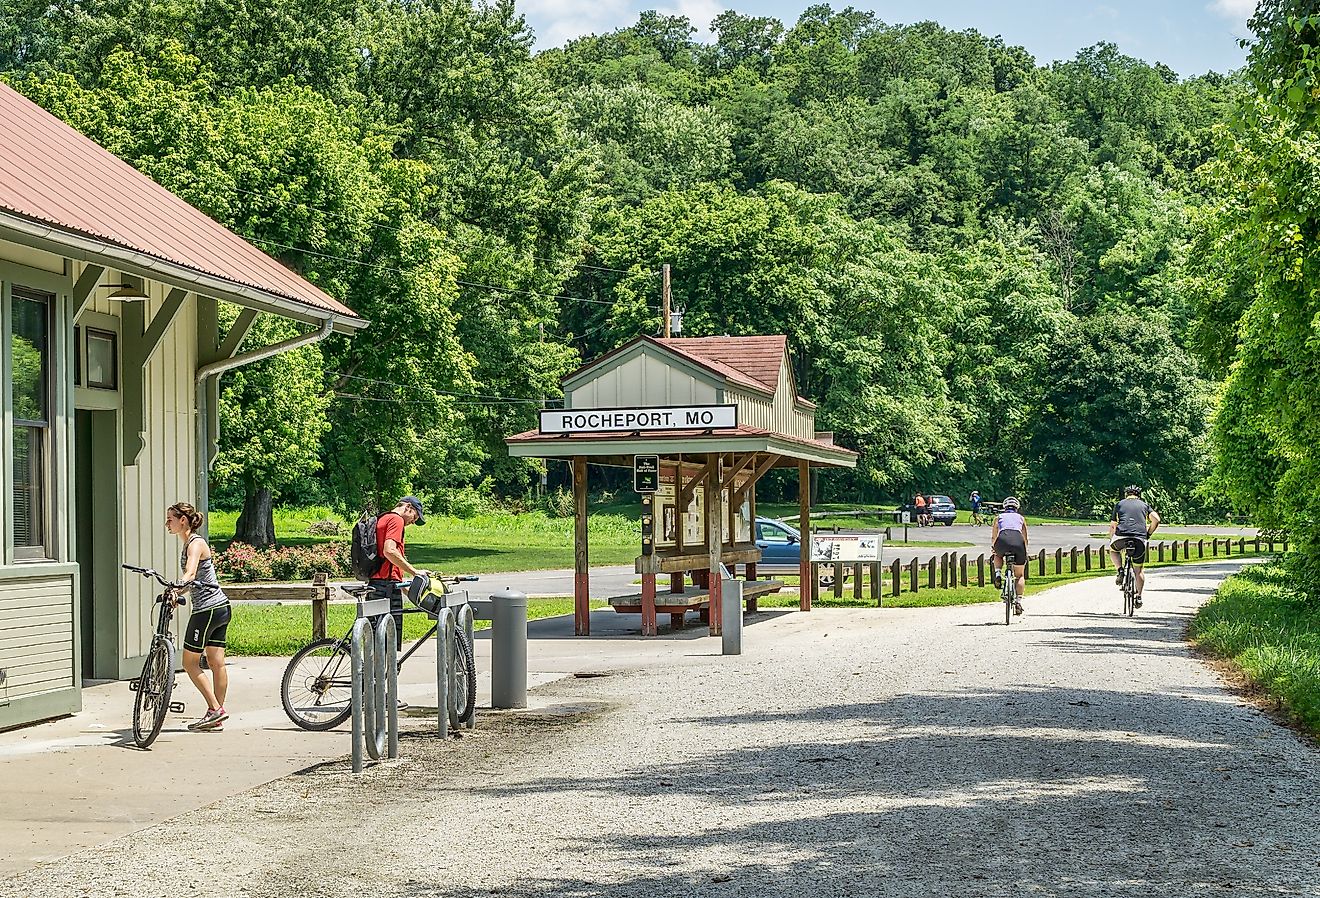 Cyclists at Rocheport station on the Katy Trail, Missouri. Image credit marekuliasz via Shutterstock